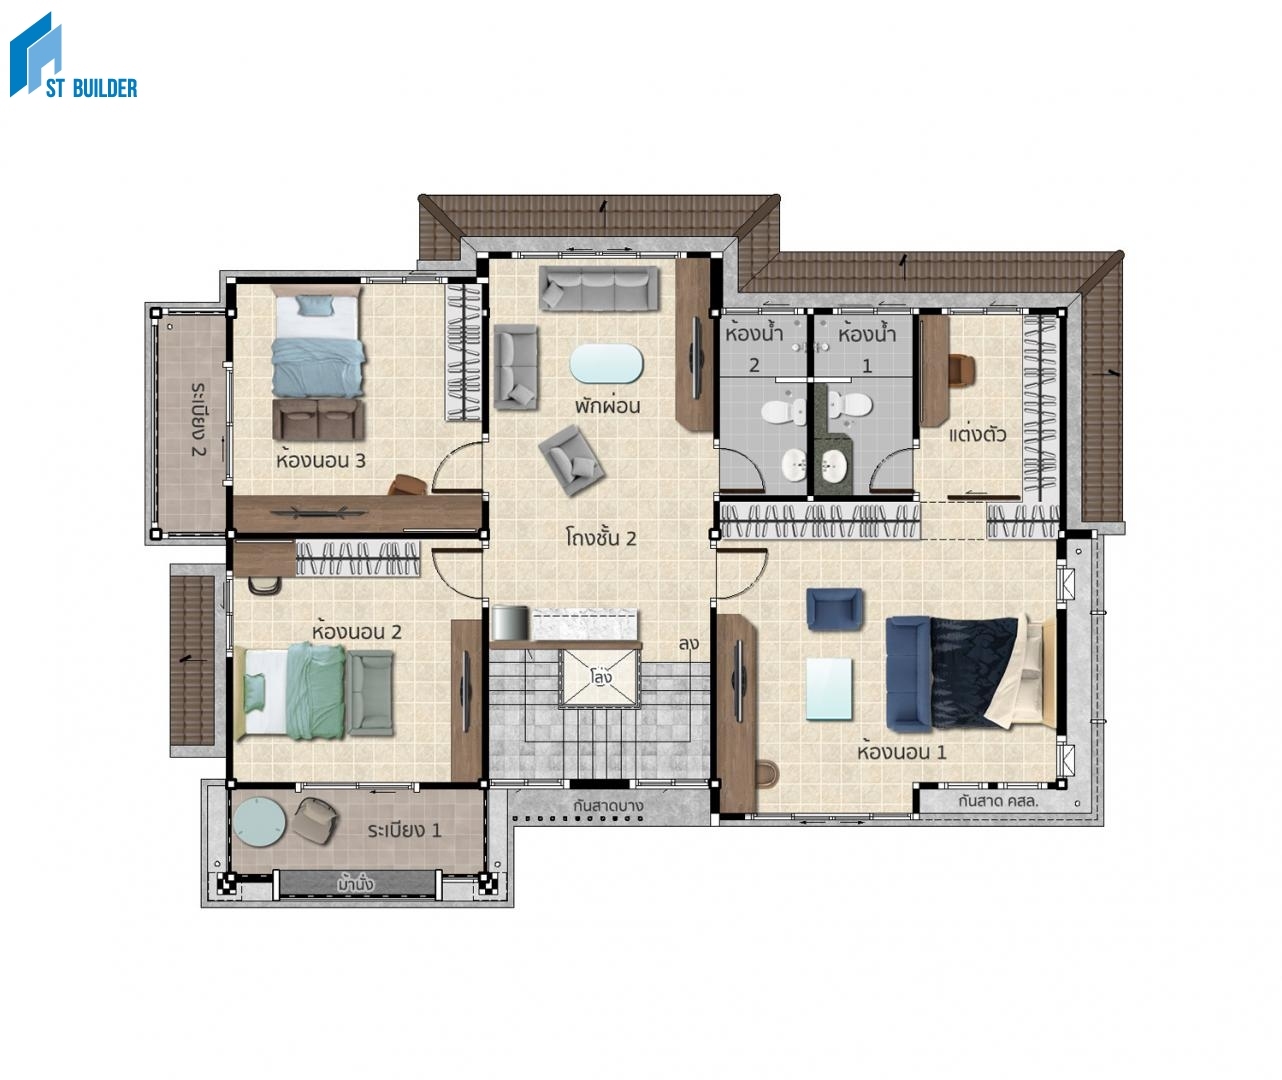 STE-208 Floor Plan A2